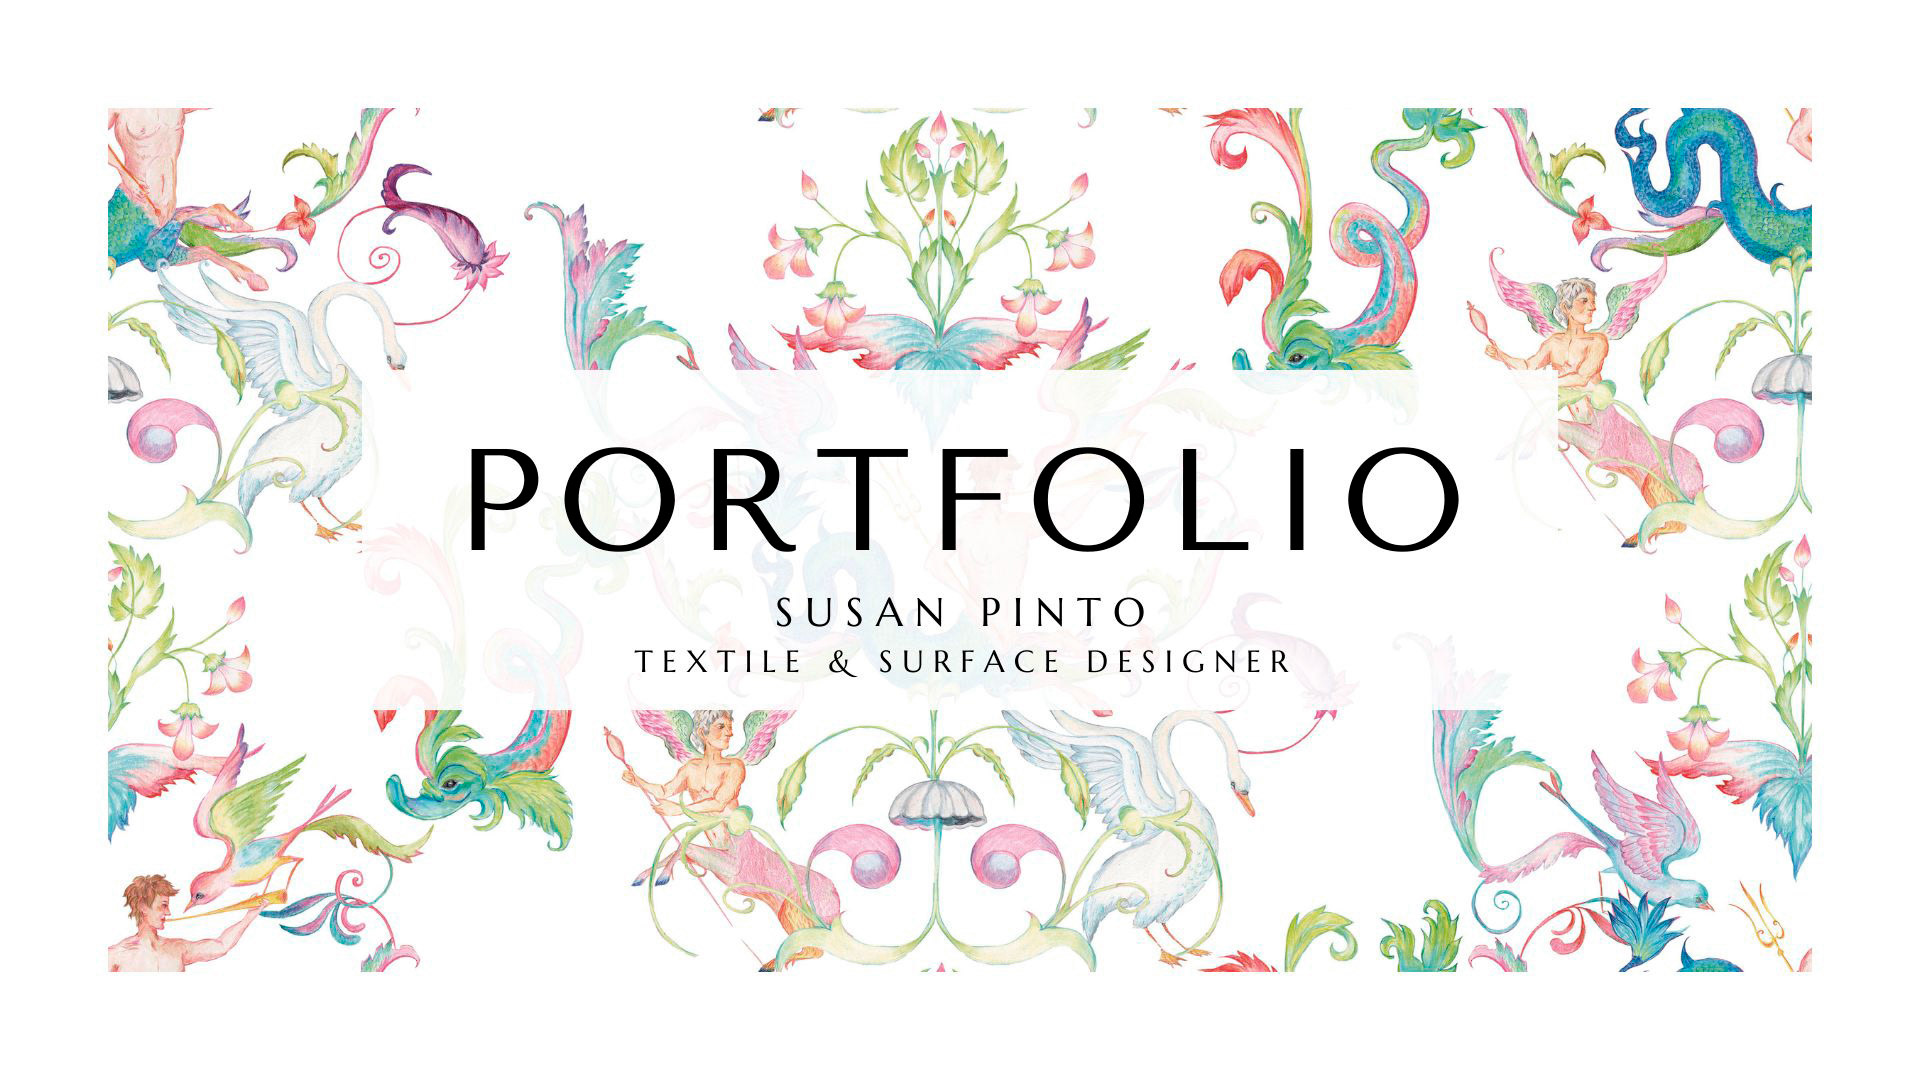 susan pinto portfolio textile and surface designer rendition image